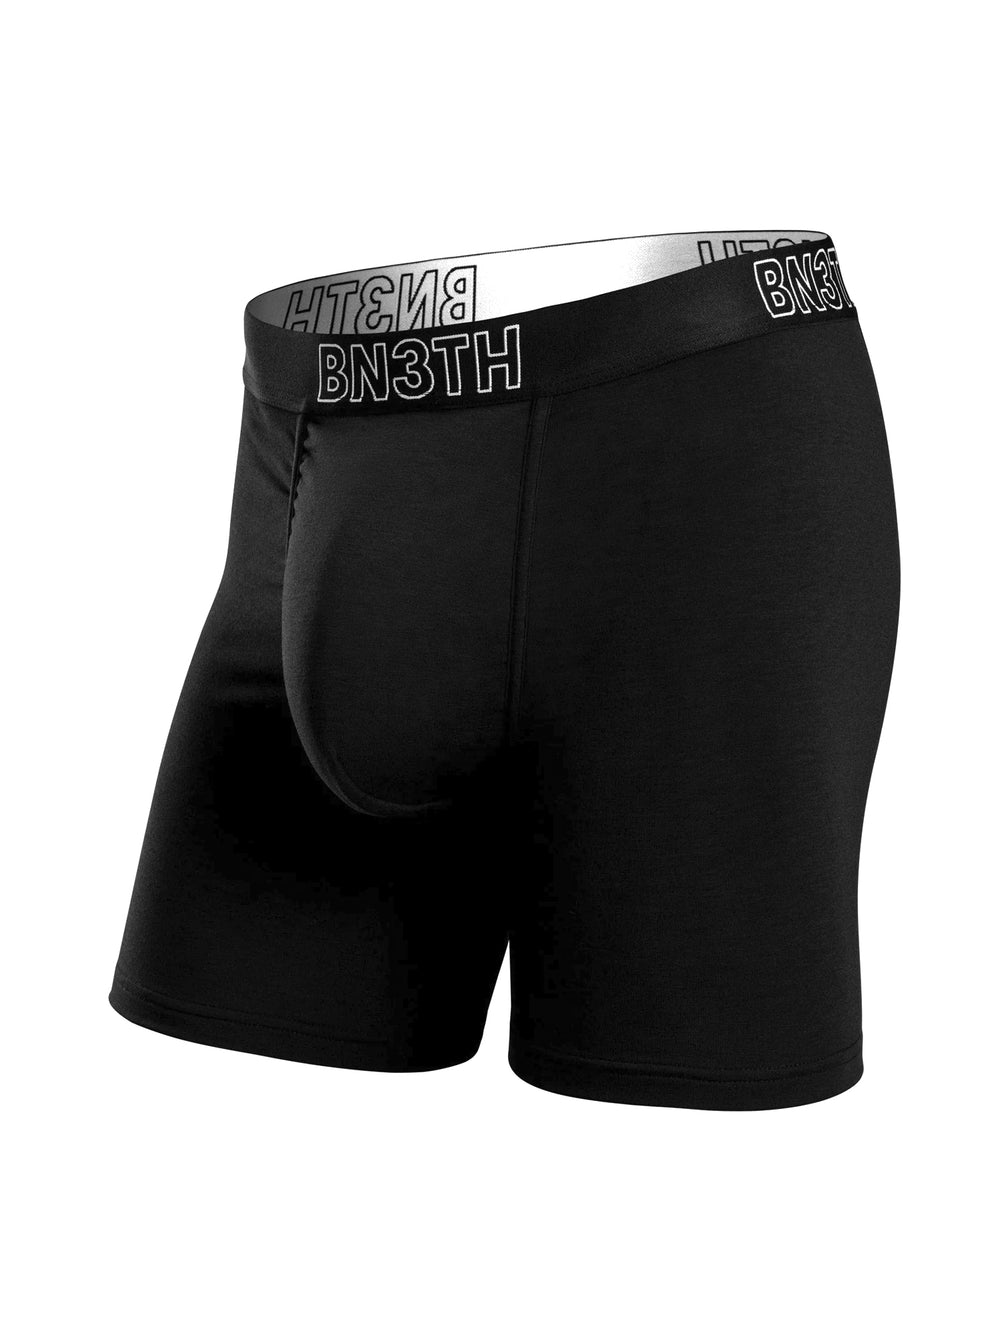 BN3TH Men's Classic Trunk (Black, XX-Small) 